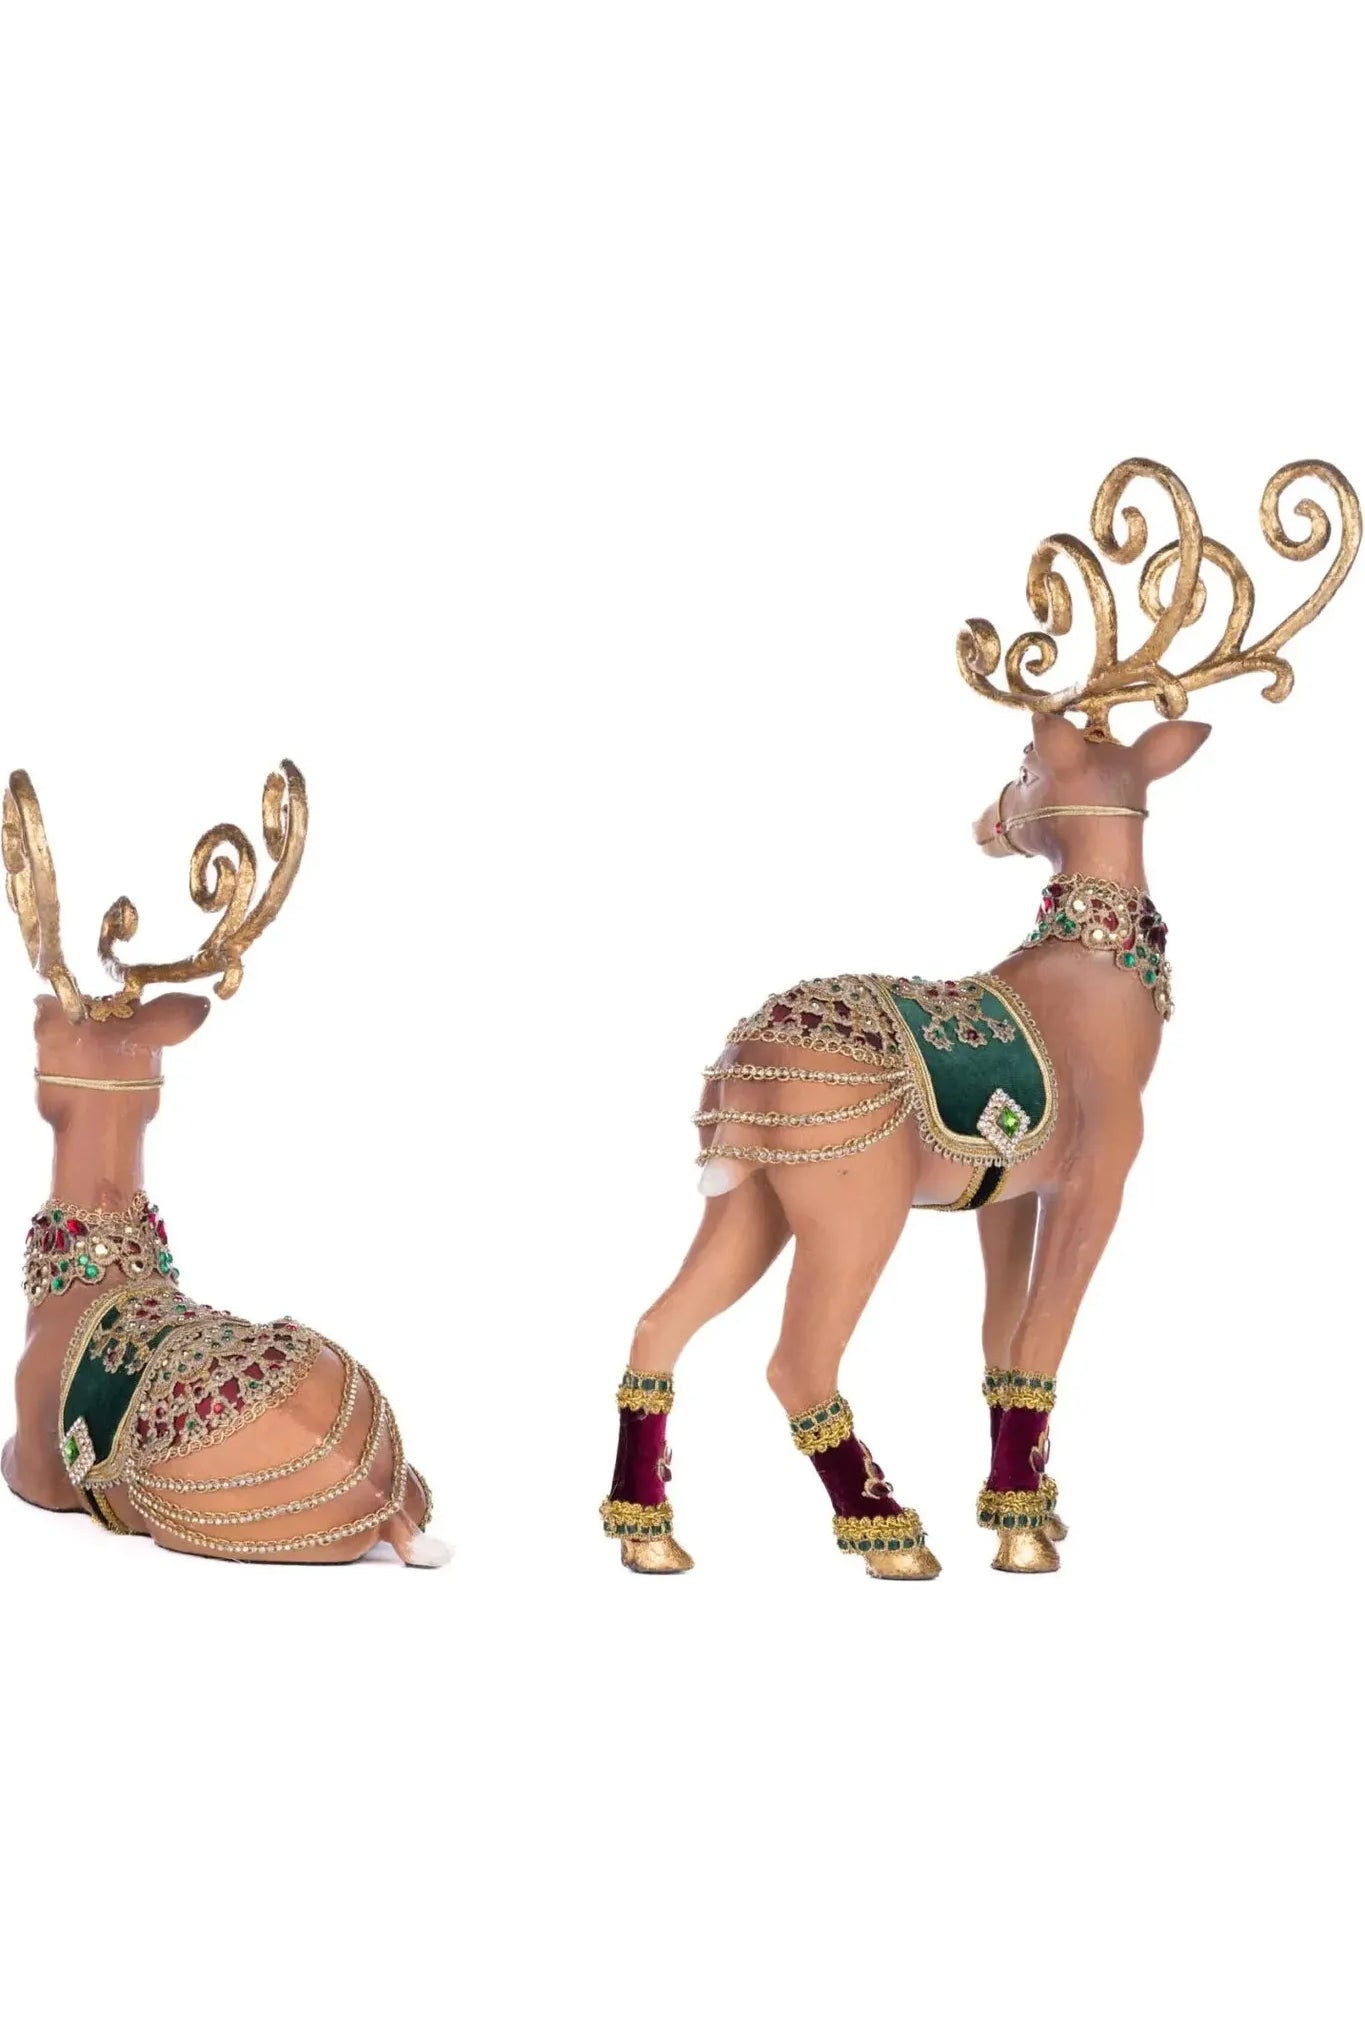 Shop For Christmas Castle Deer Assortment of 2 28-428542